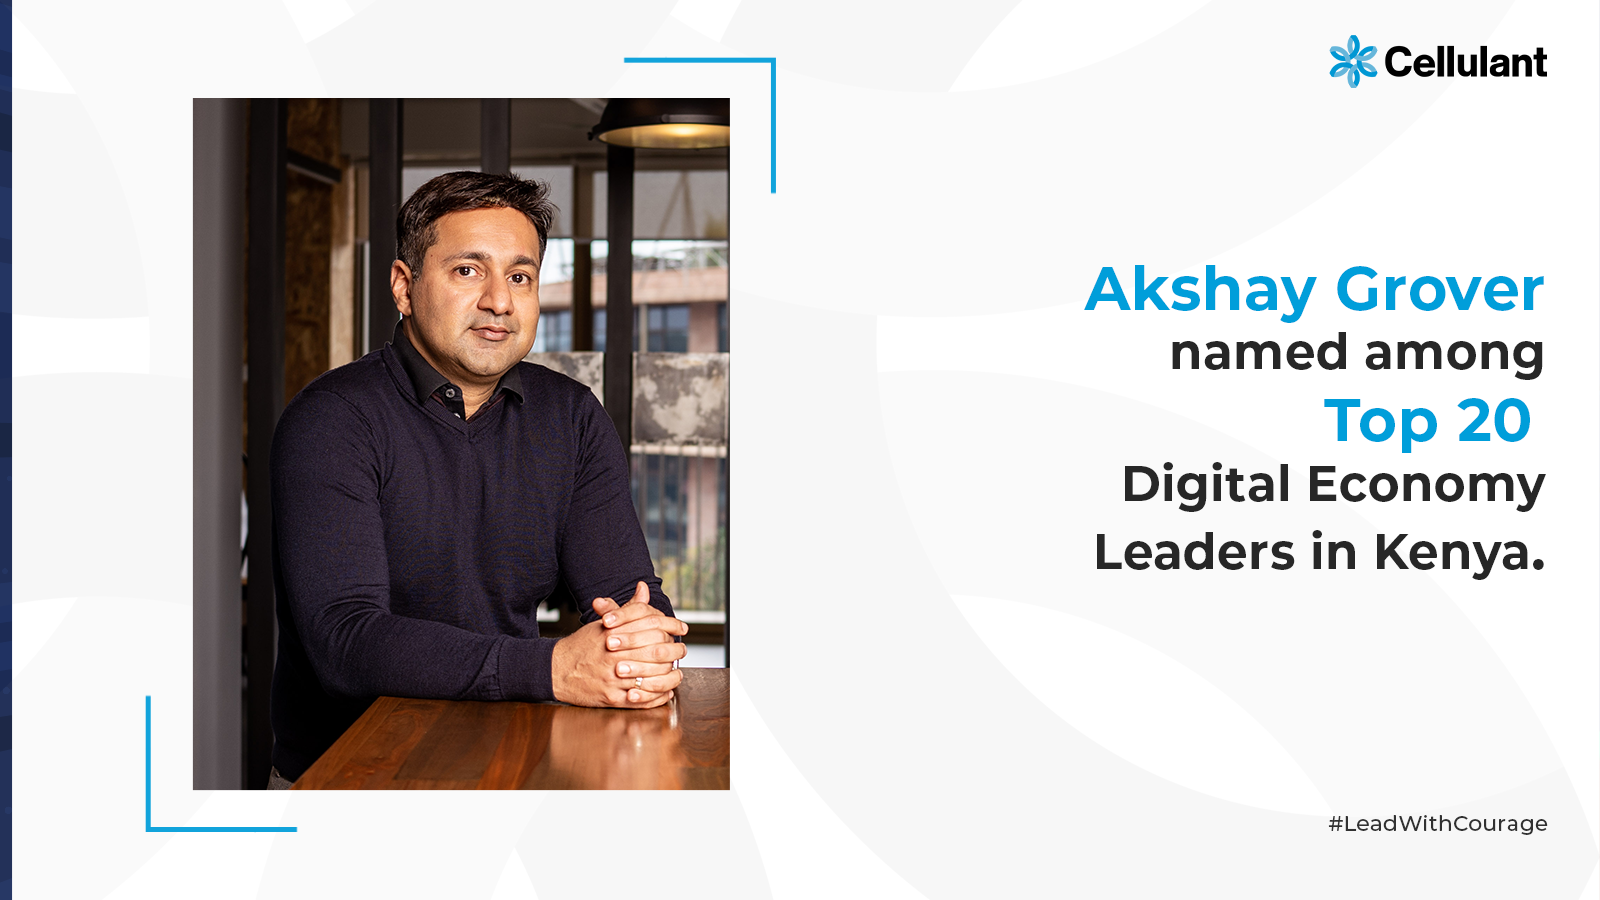 Akshay Grover: Celebrating One Of The Top 20 Digital Economy Leaders